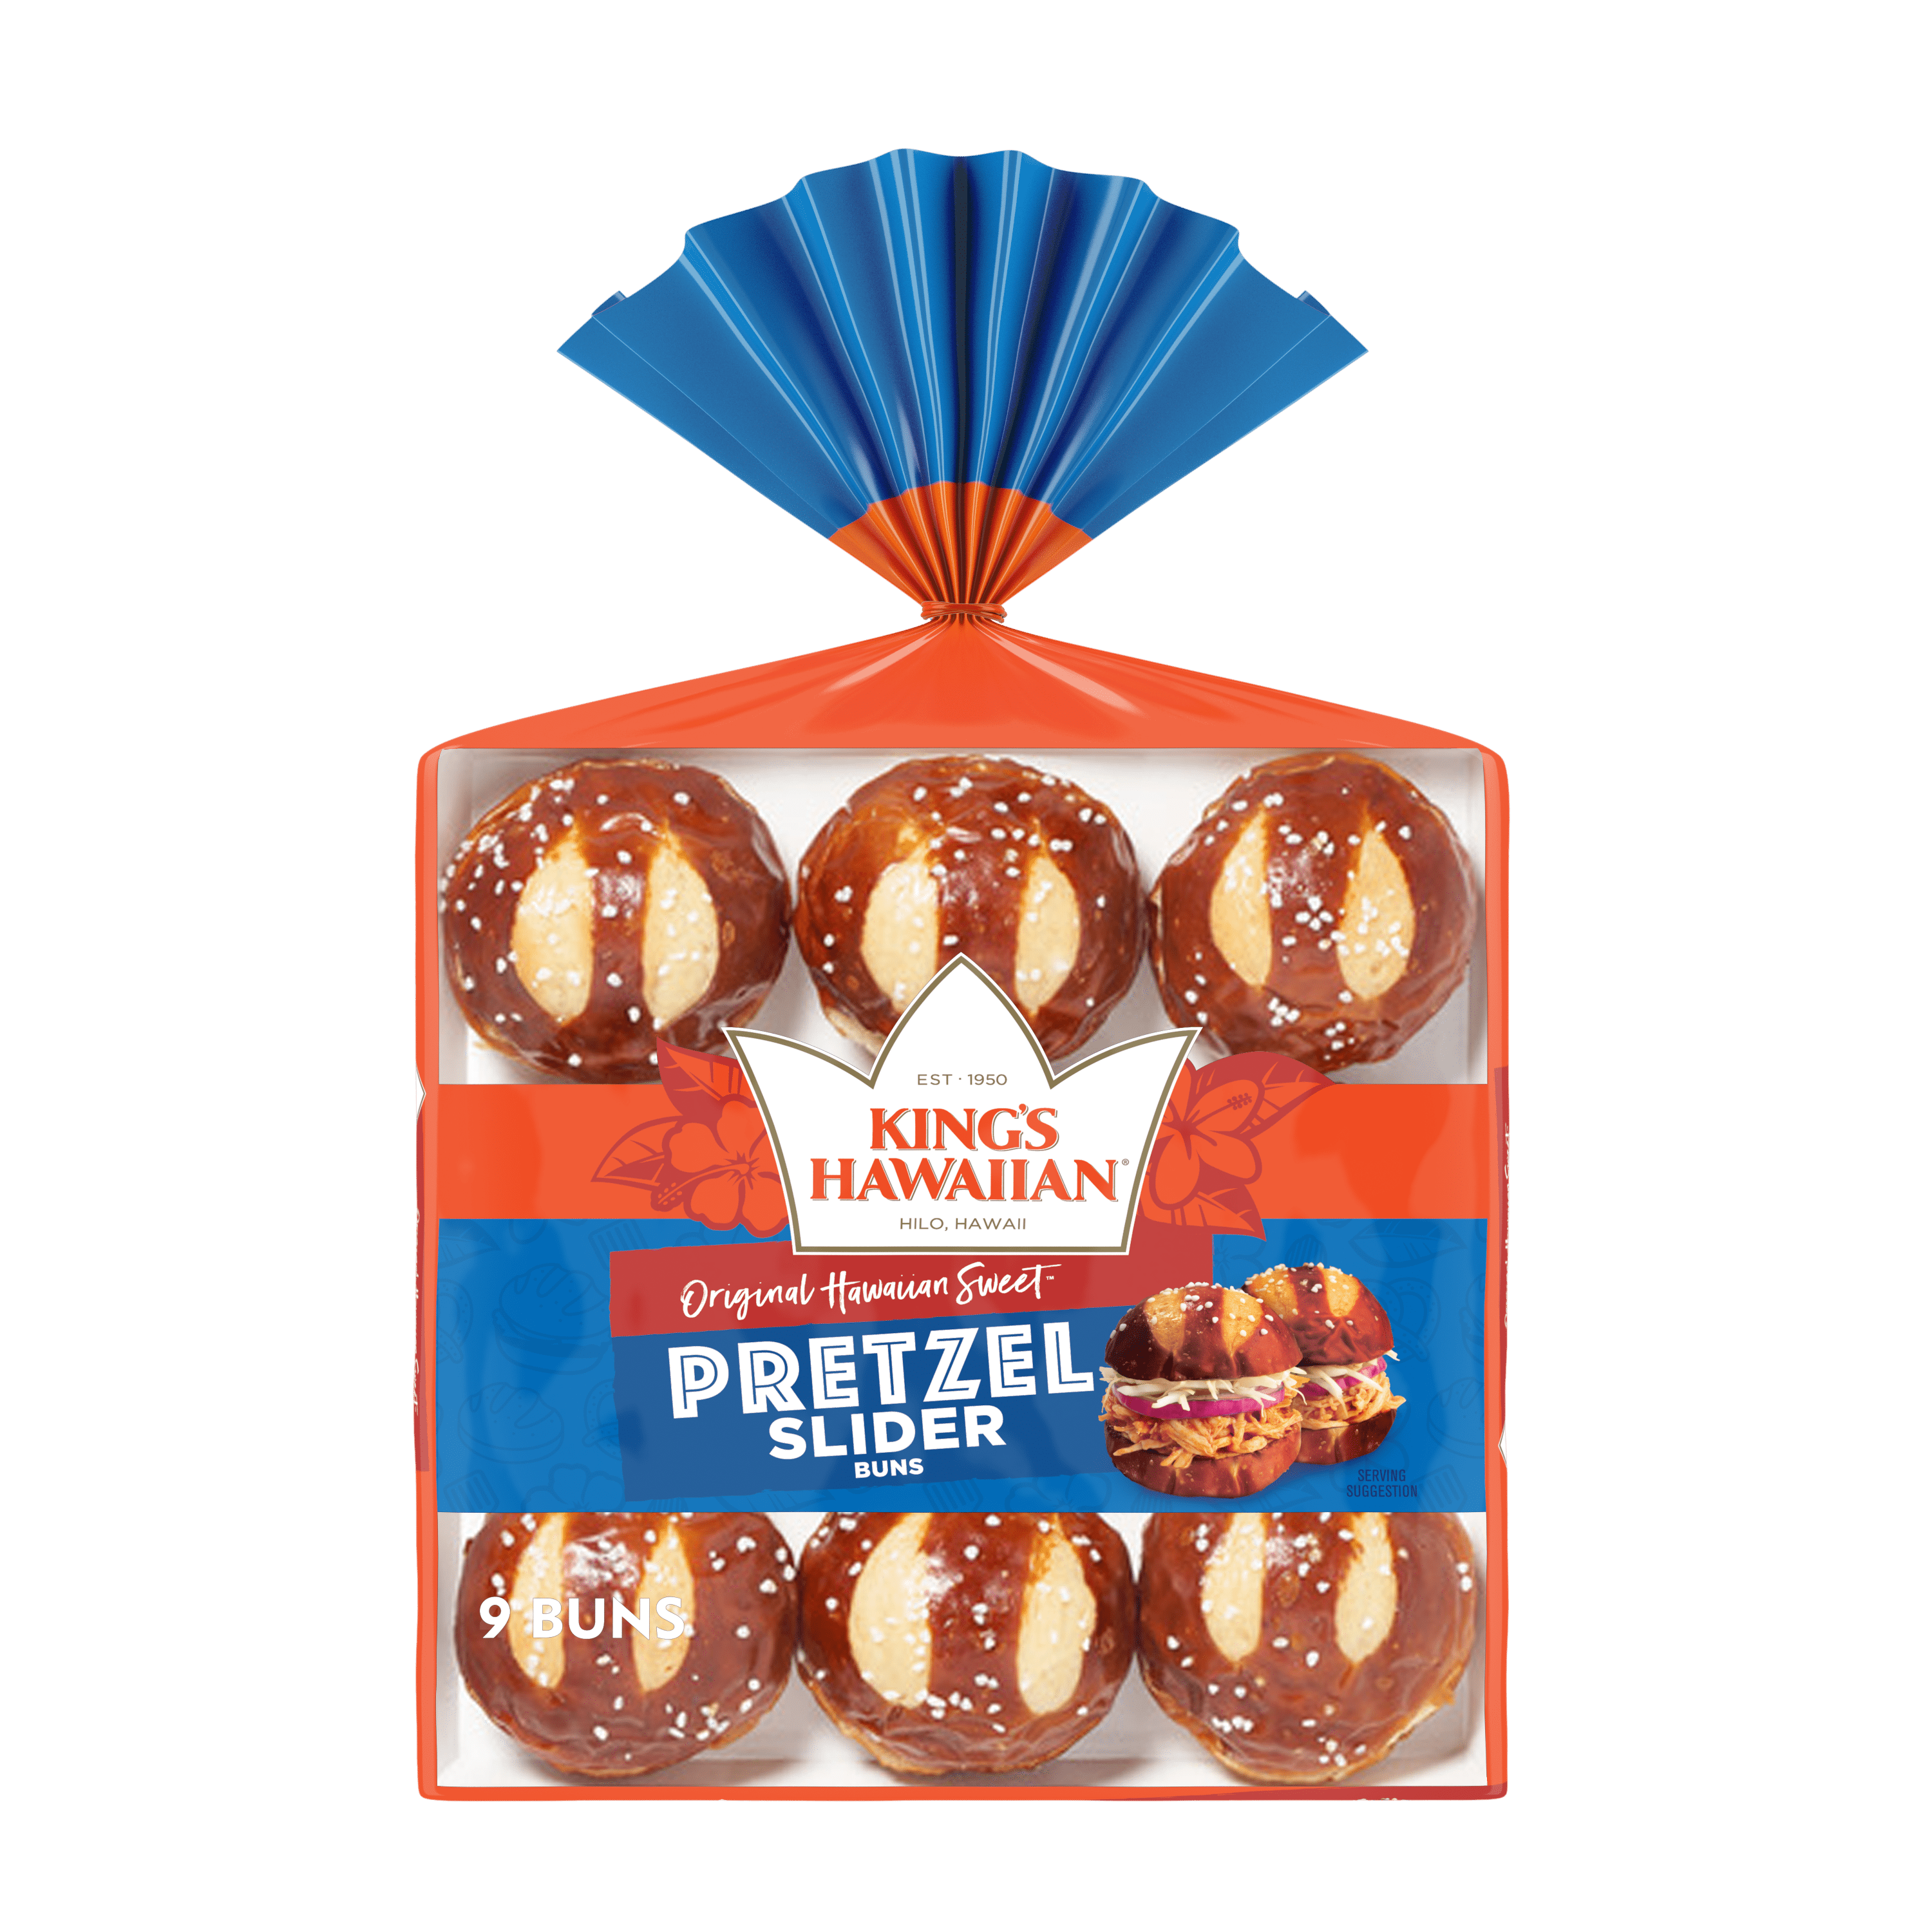 King's Hawaiian Original Hawaiian Sweet Pretzel Pre-Sliced Slider Buns, 9 ct